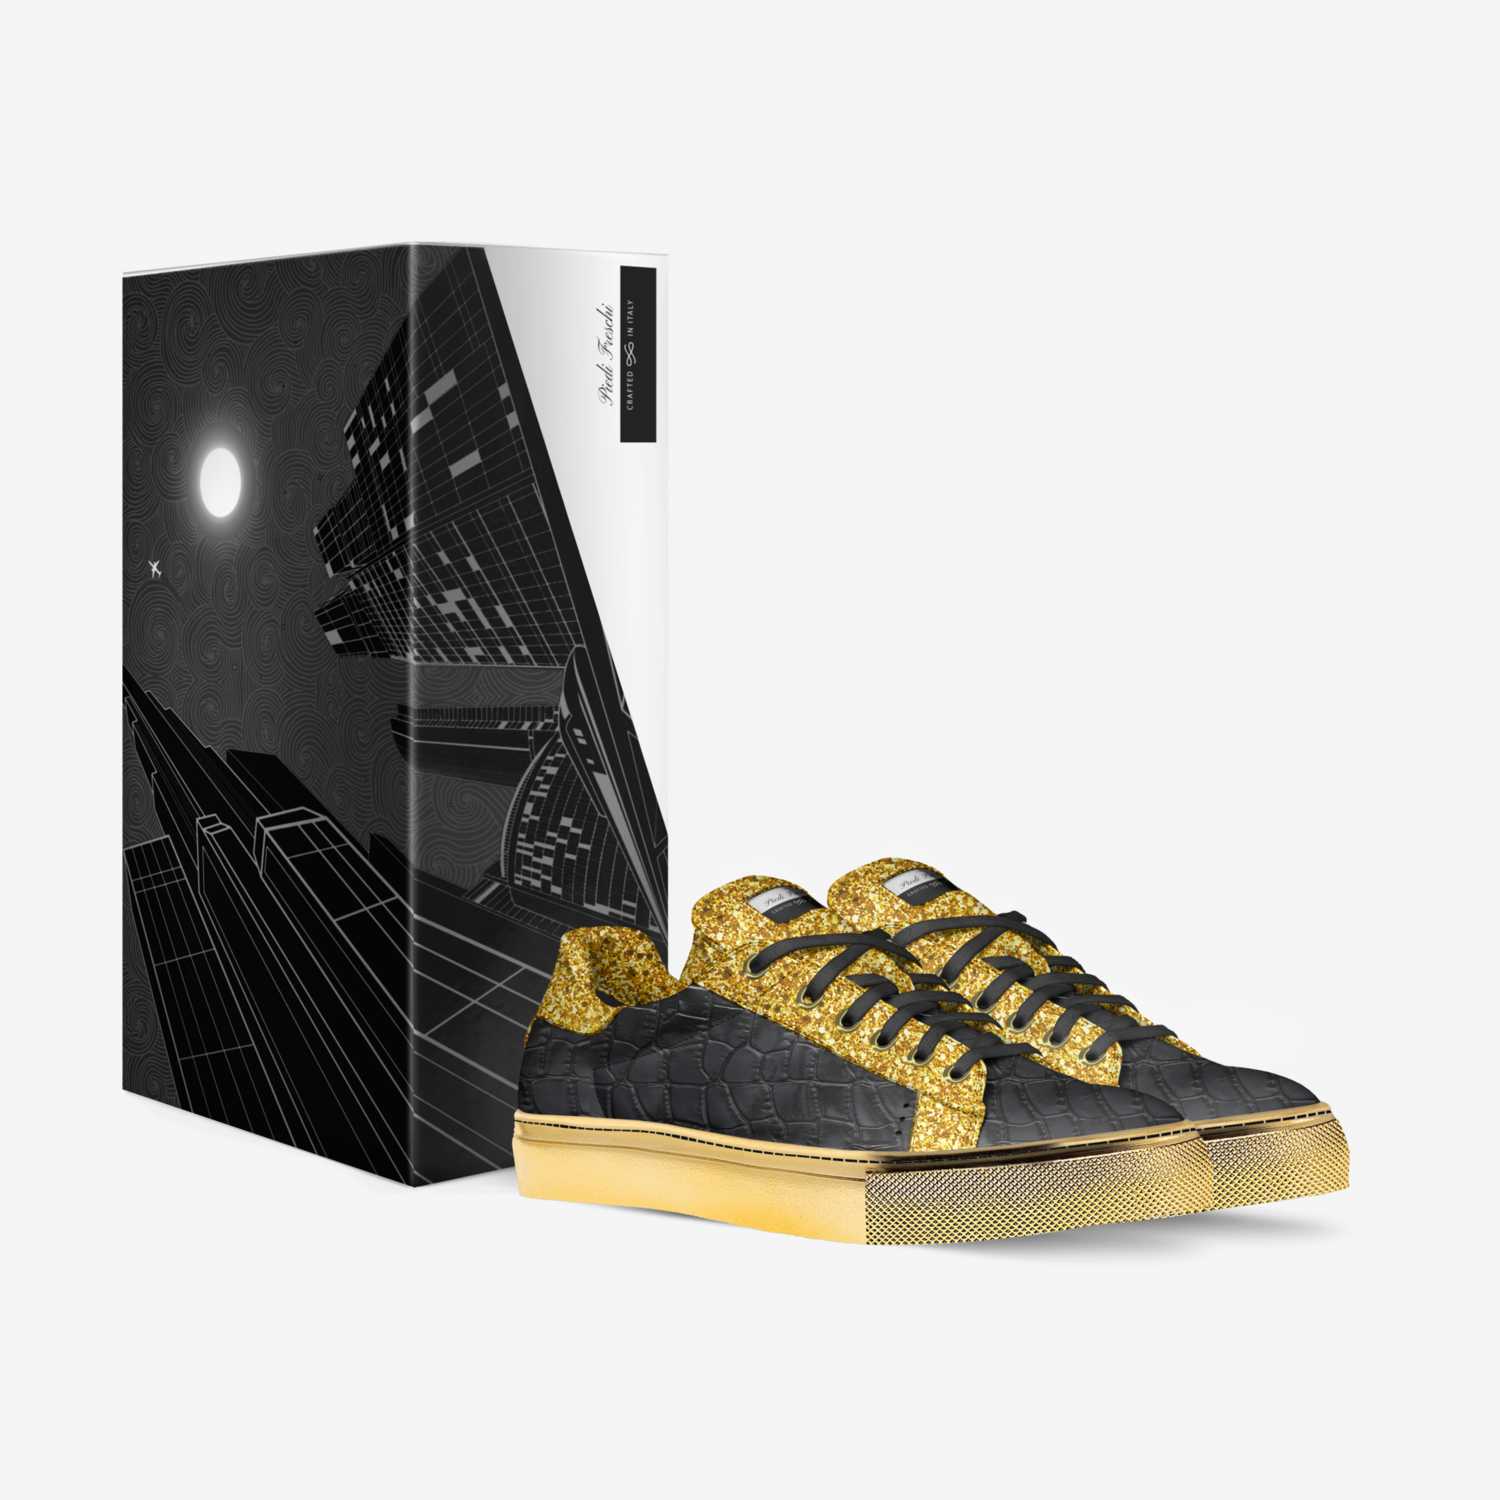 Piedi Freschi custom made in Italy shoes by Lamar Jones | Box view